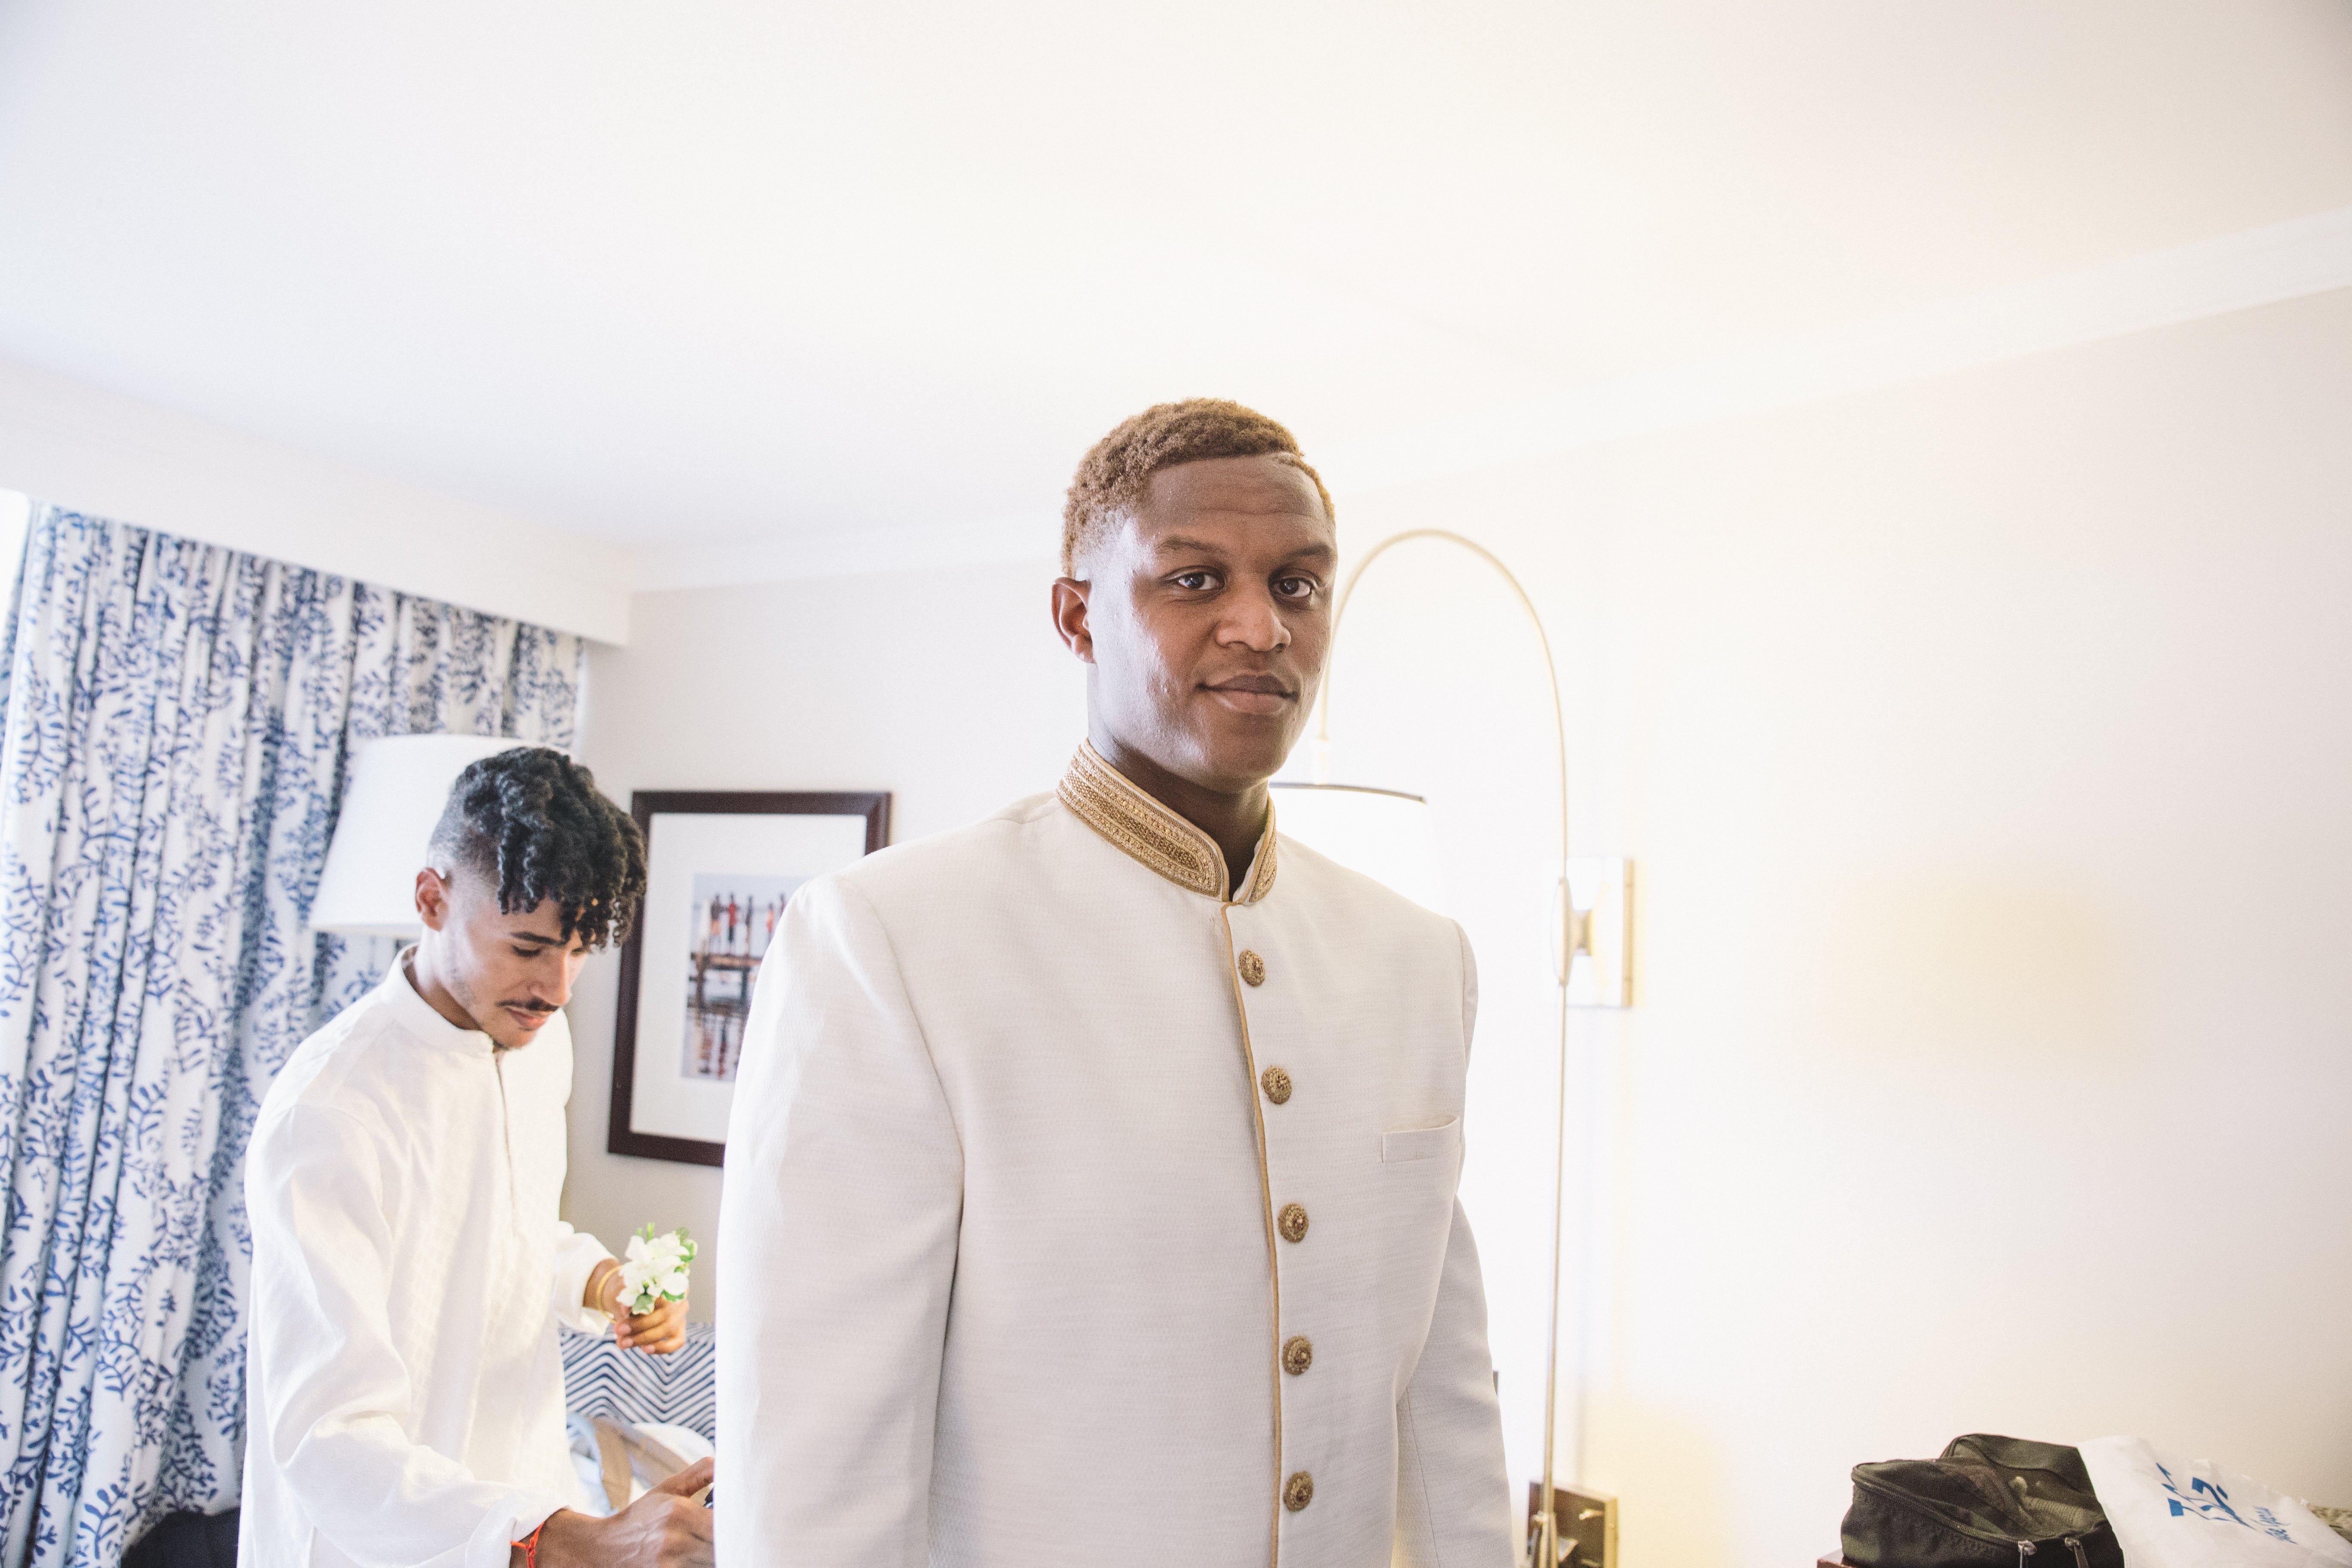 Bridal Bliss: Quinnton and Ariel's Bahamas Wedding Photos Are Gorgeous
